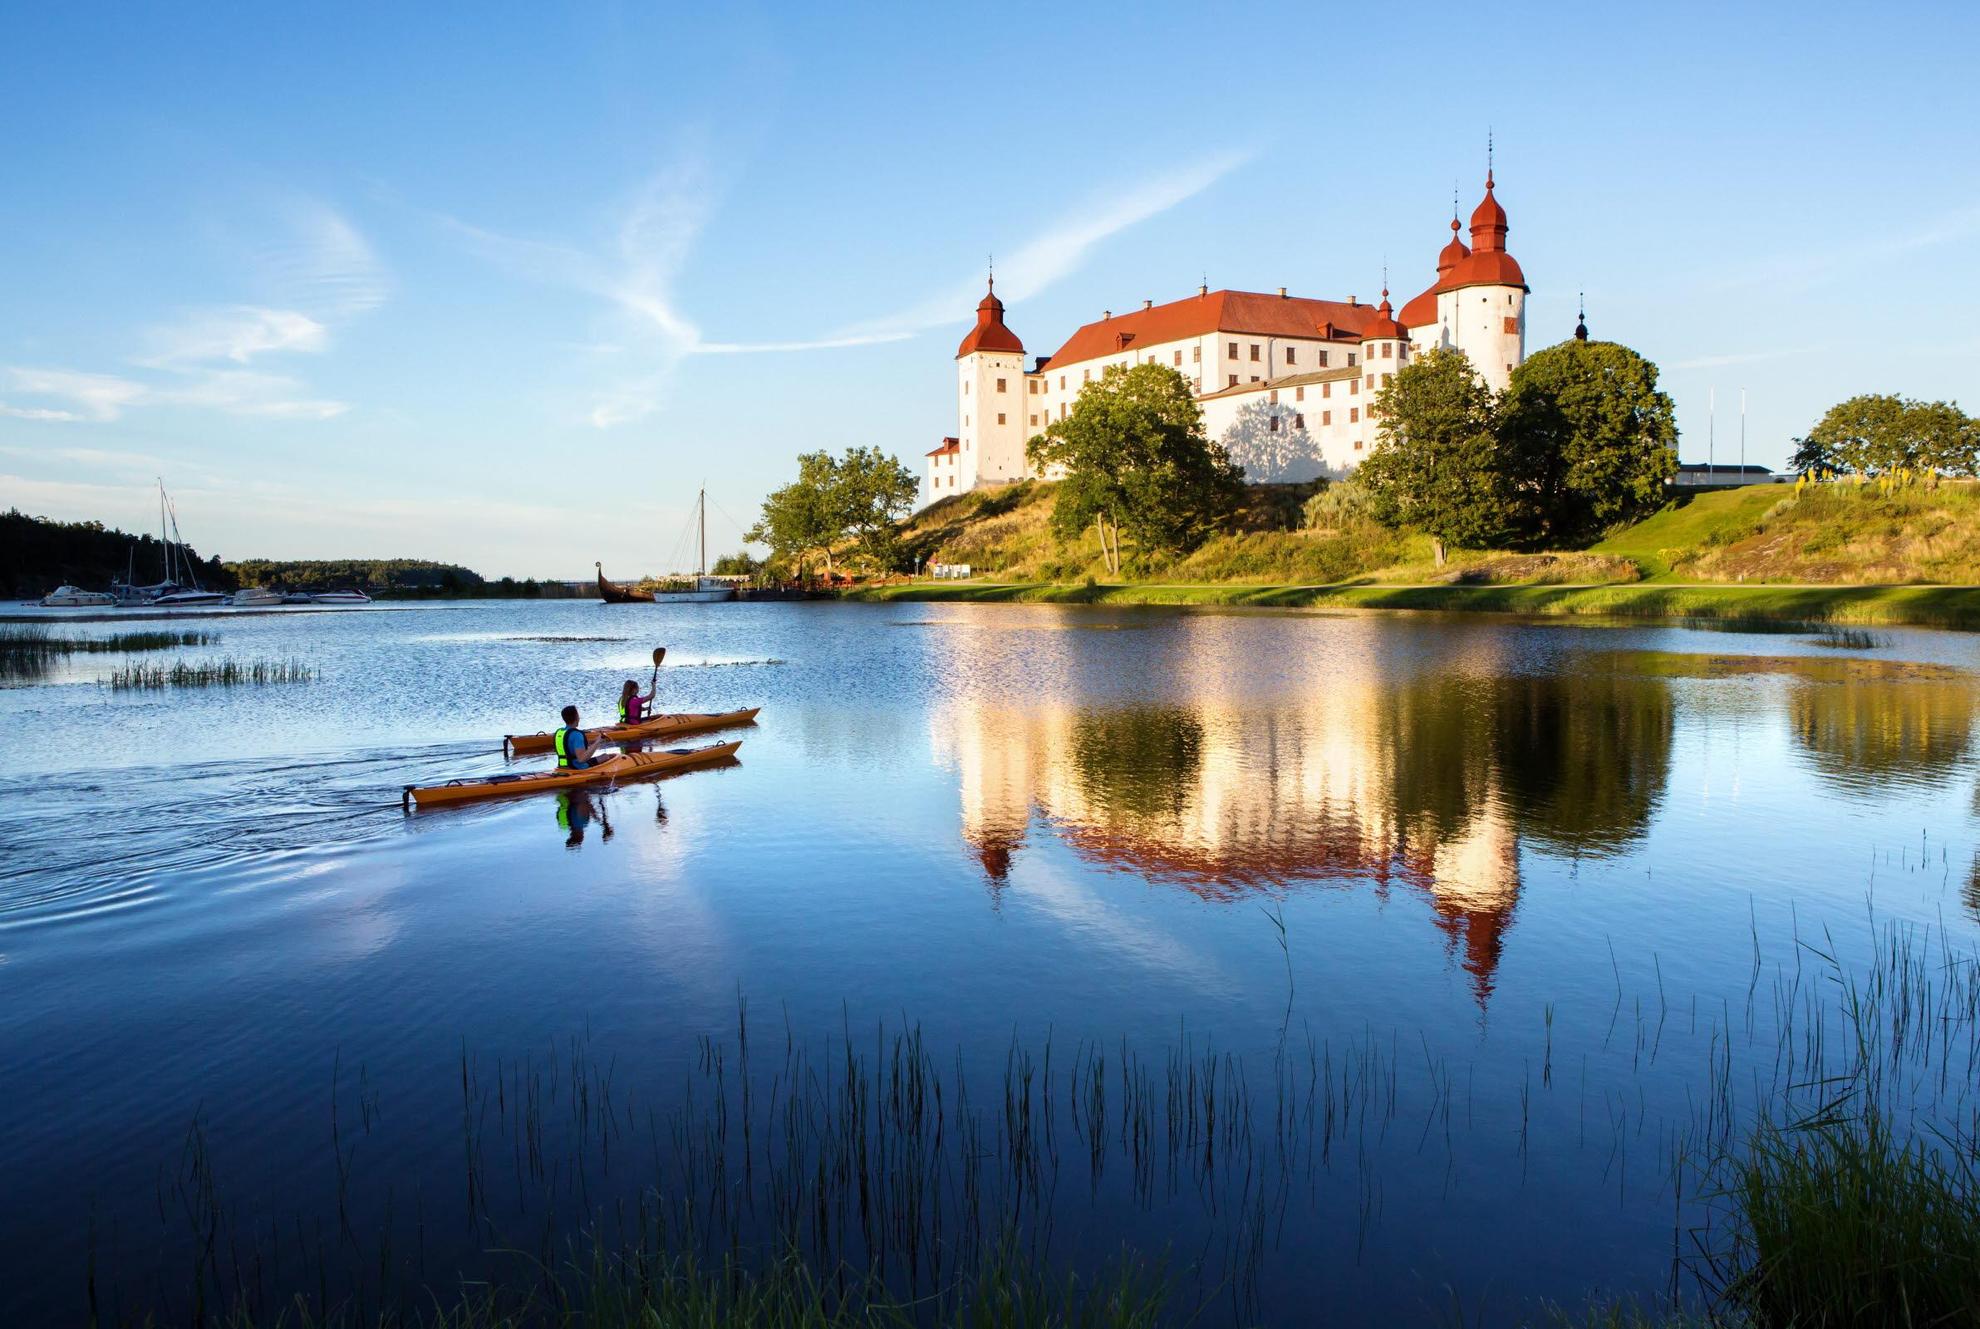 Canoeing by Läckö castle, West Sweden